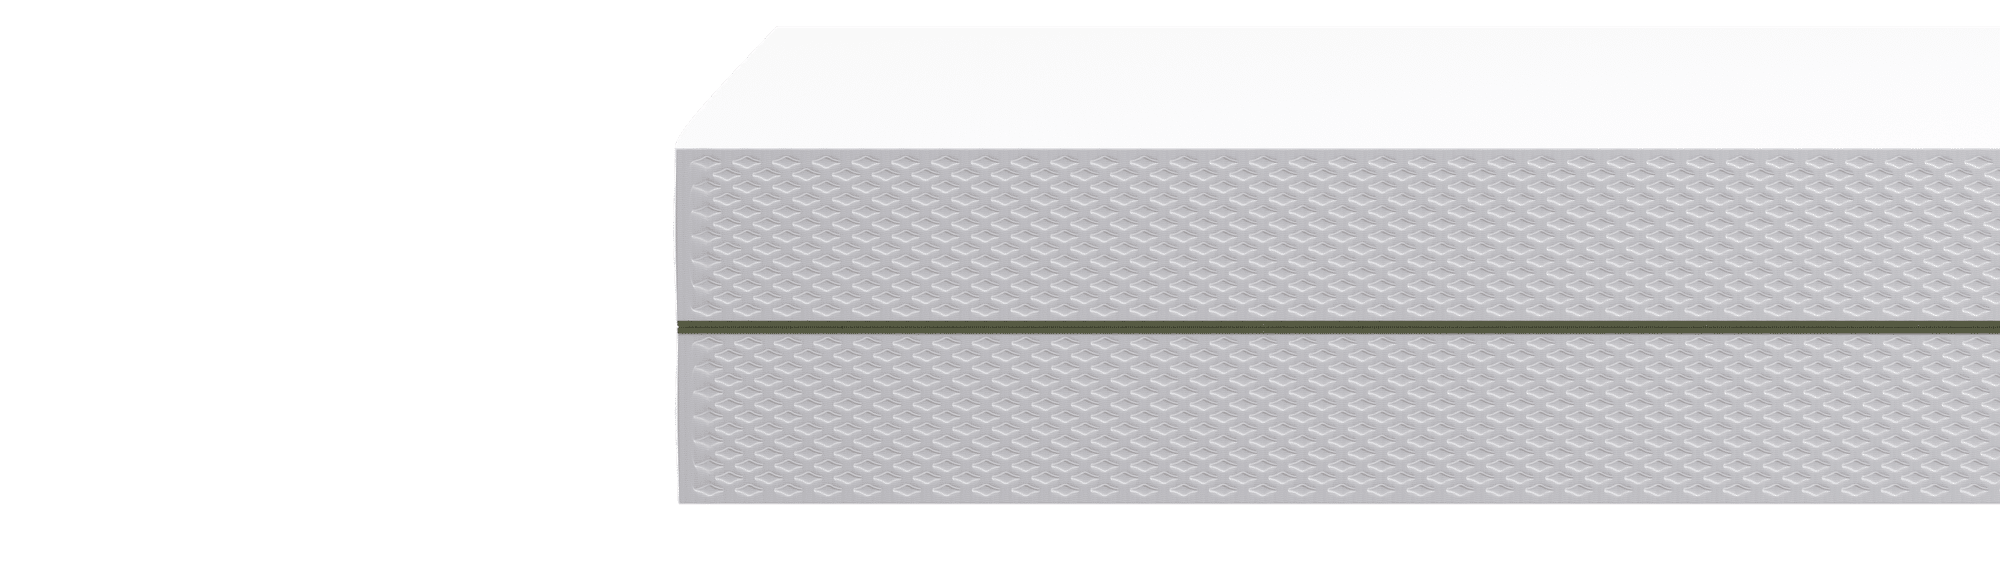 FLEXA Reversible latex mattress with cotton cover 200x90